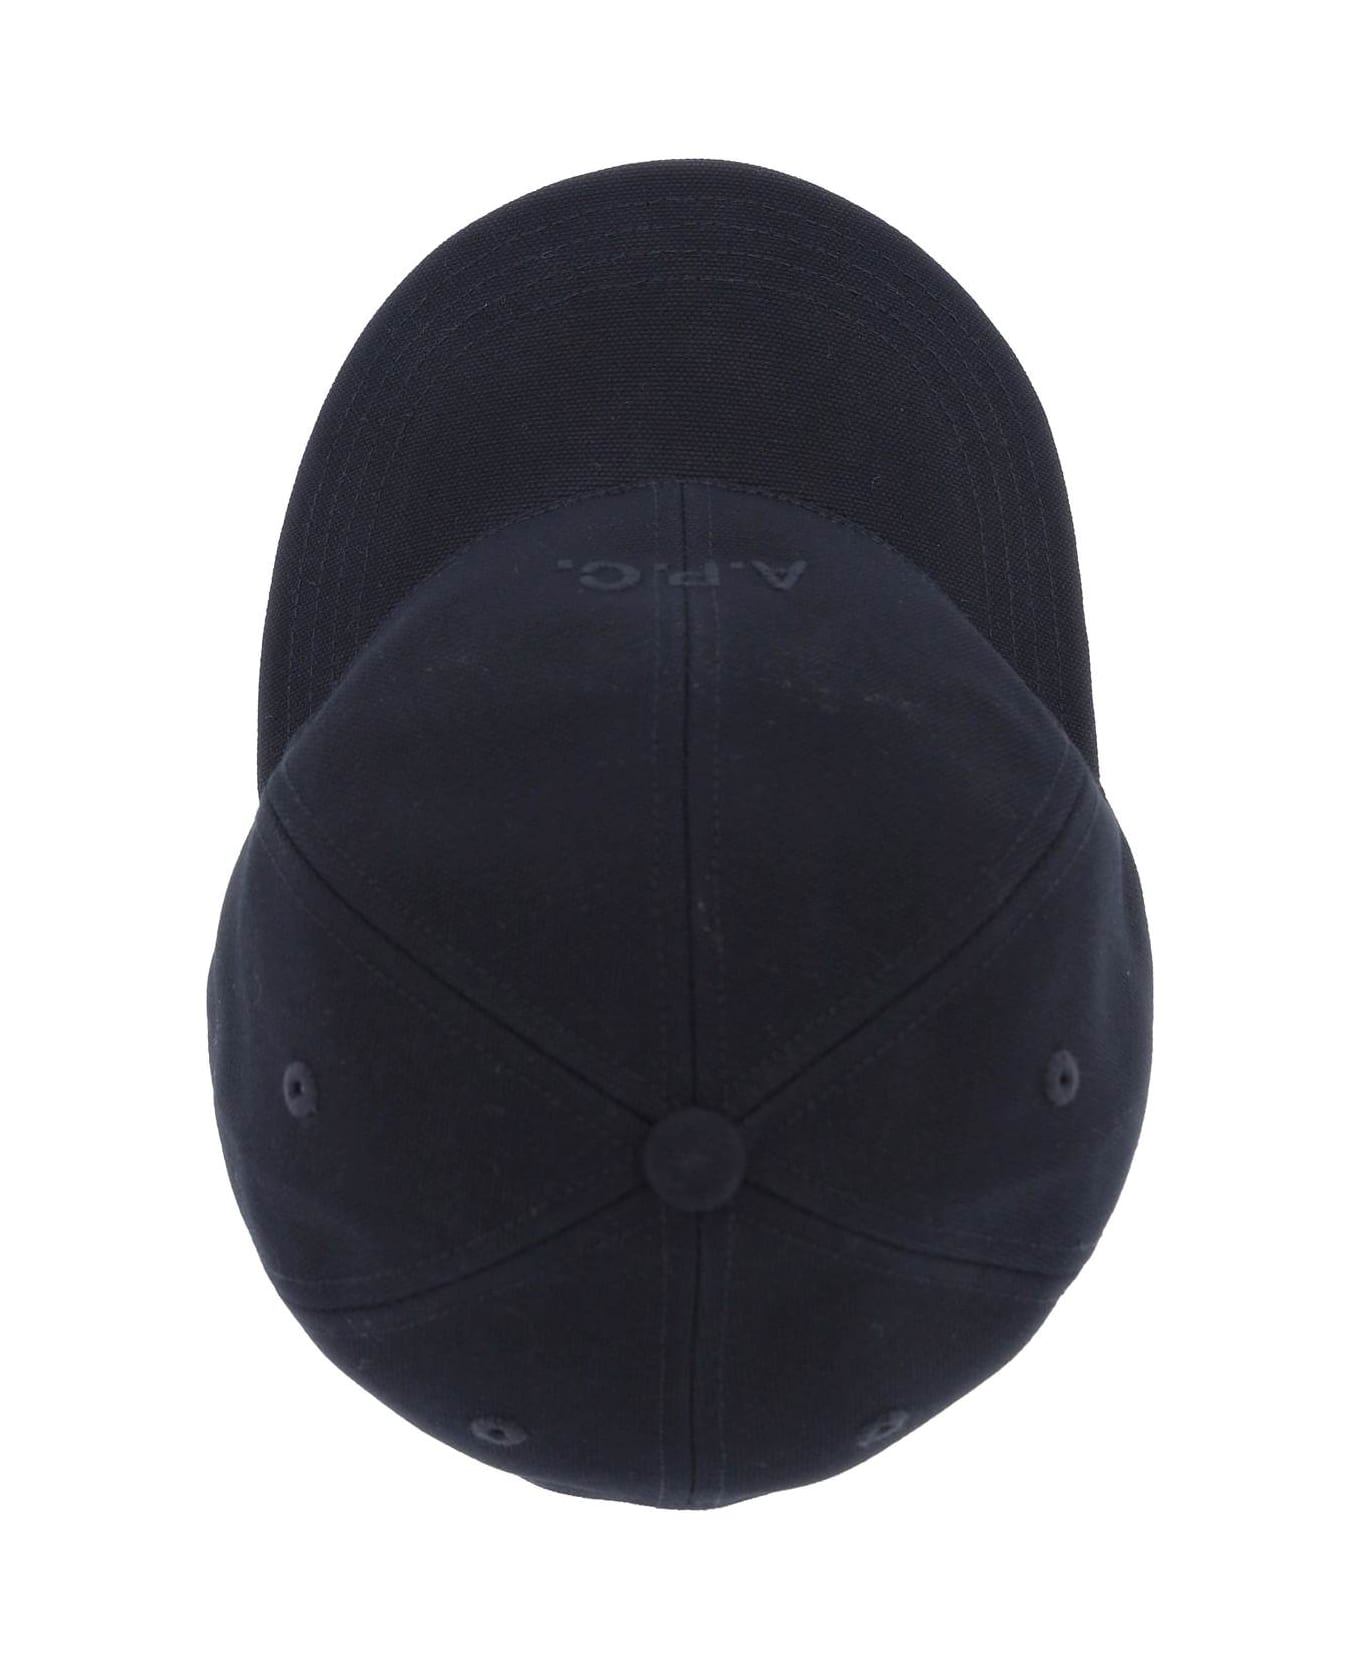 A.P.C. Charlie Cap - DARK NAVY (Blue) 帽子